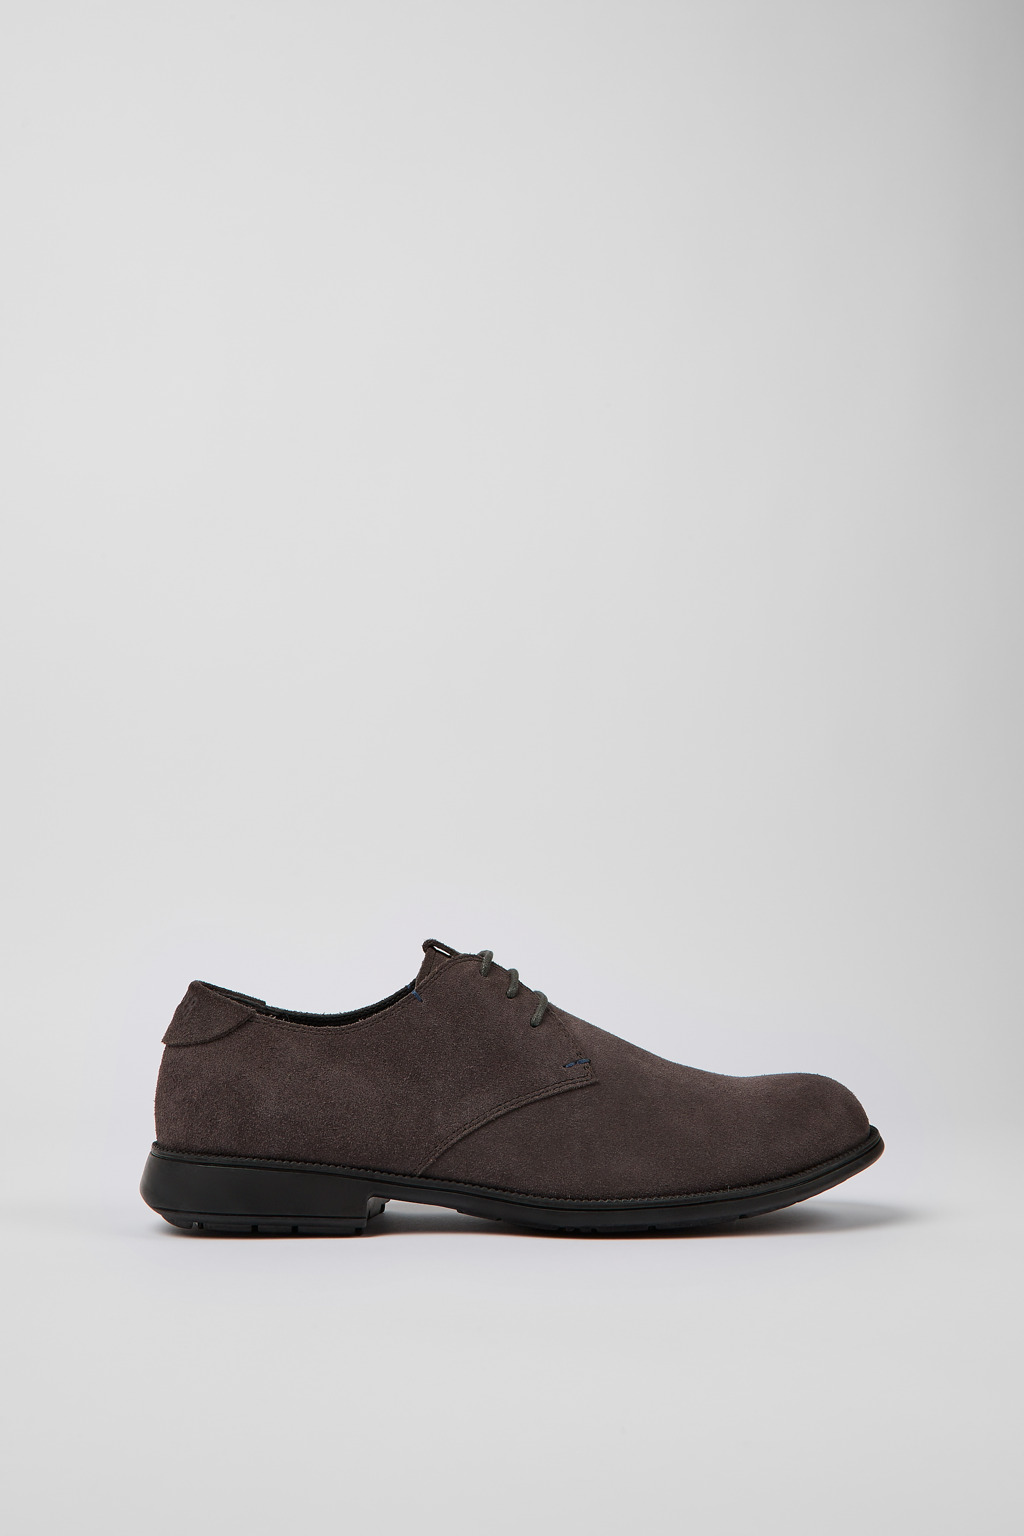 Neuman Brown Gray Formal Shoes for Men - Camper Shoes